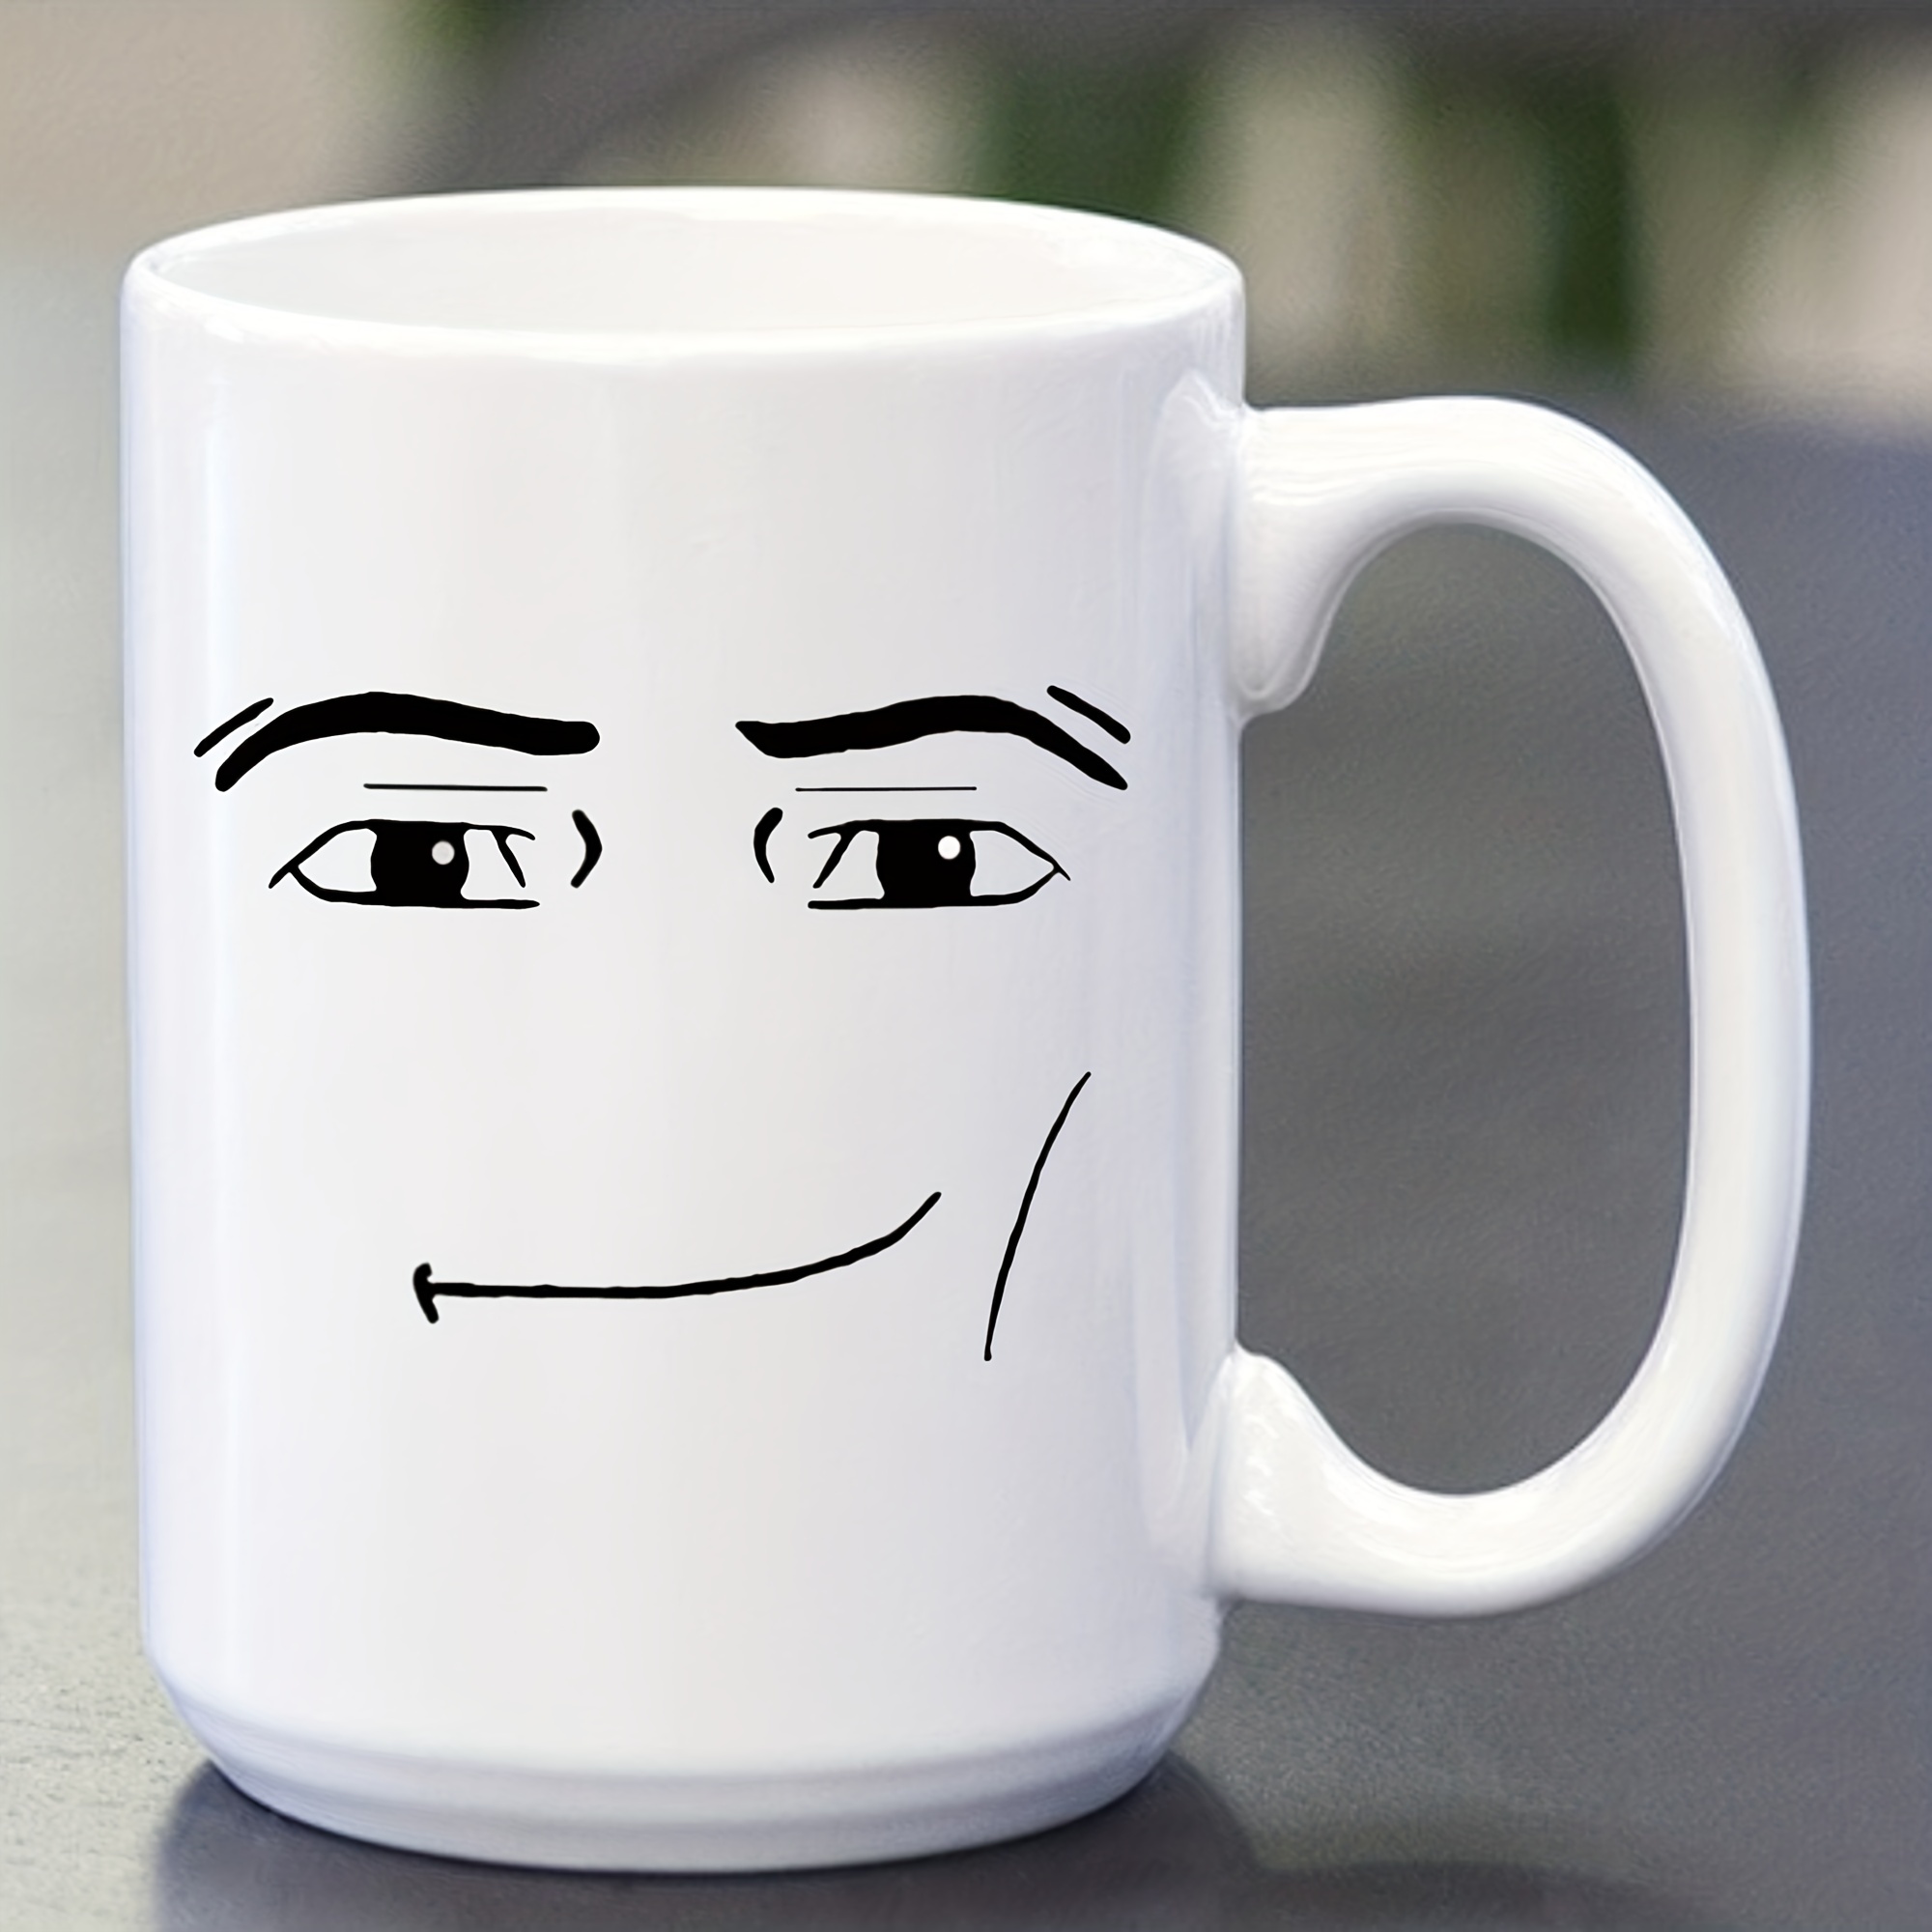 Perfect Dude Mug for Boys - Funny Coffee Mug - Fun Mugs - Cool Coffee Mugs  for Men - 11 oz